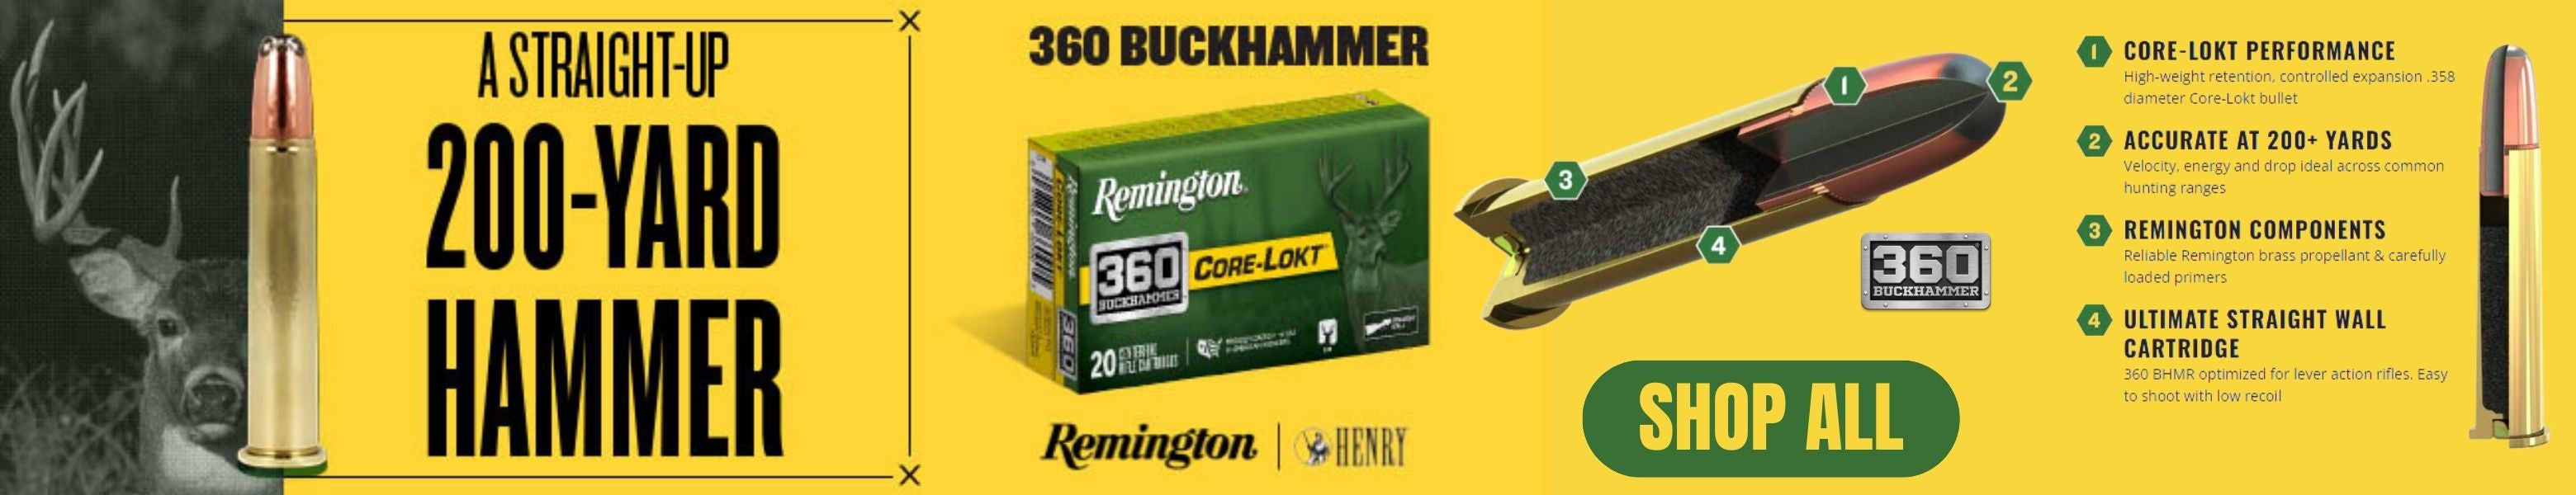 Remington 360 Buckhammer Ammunition